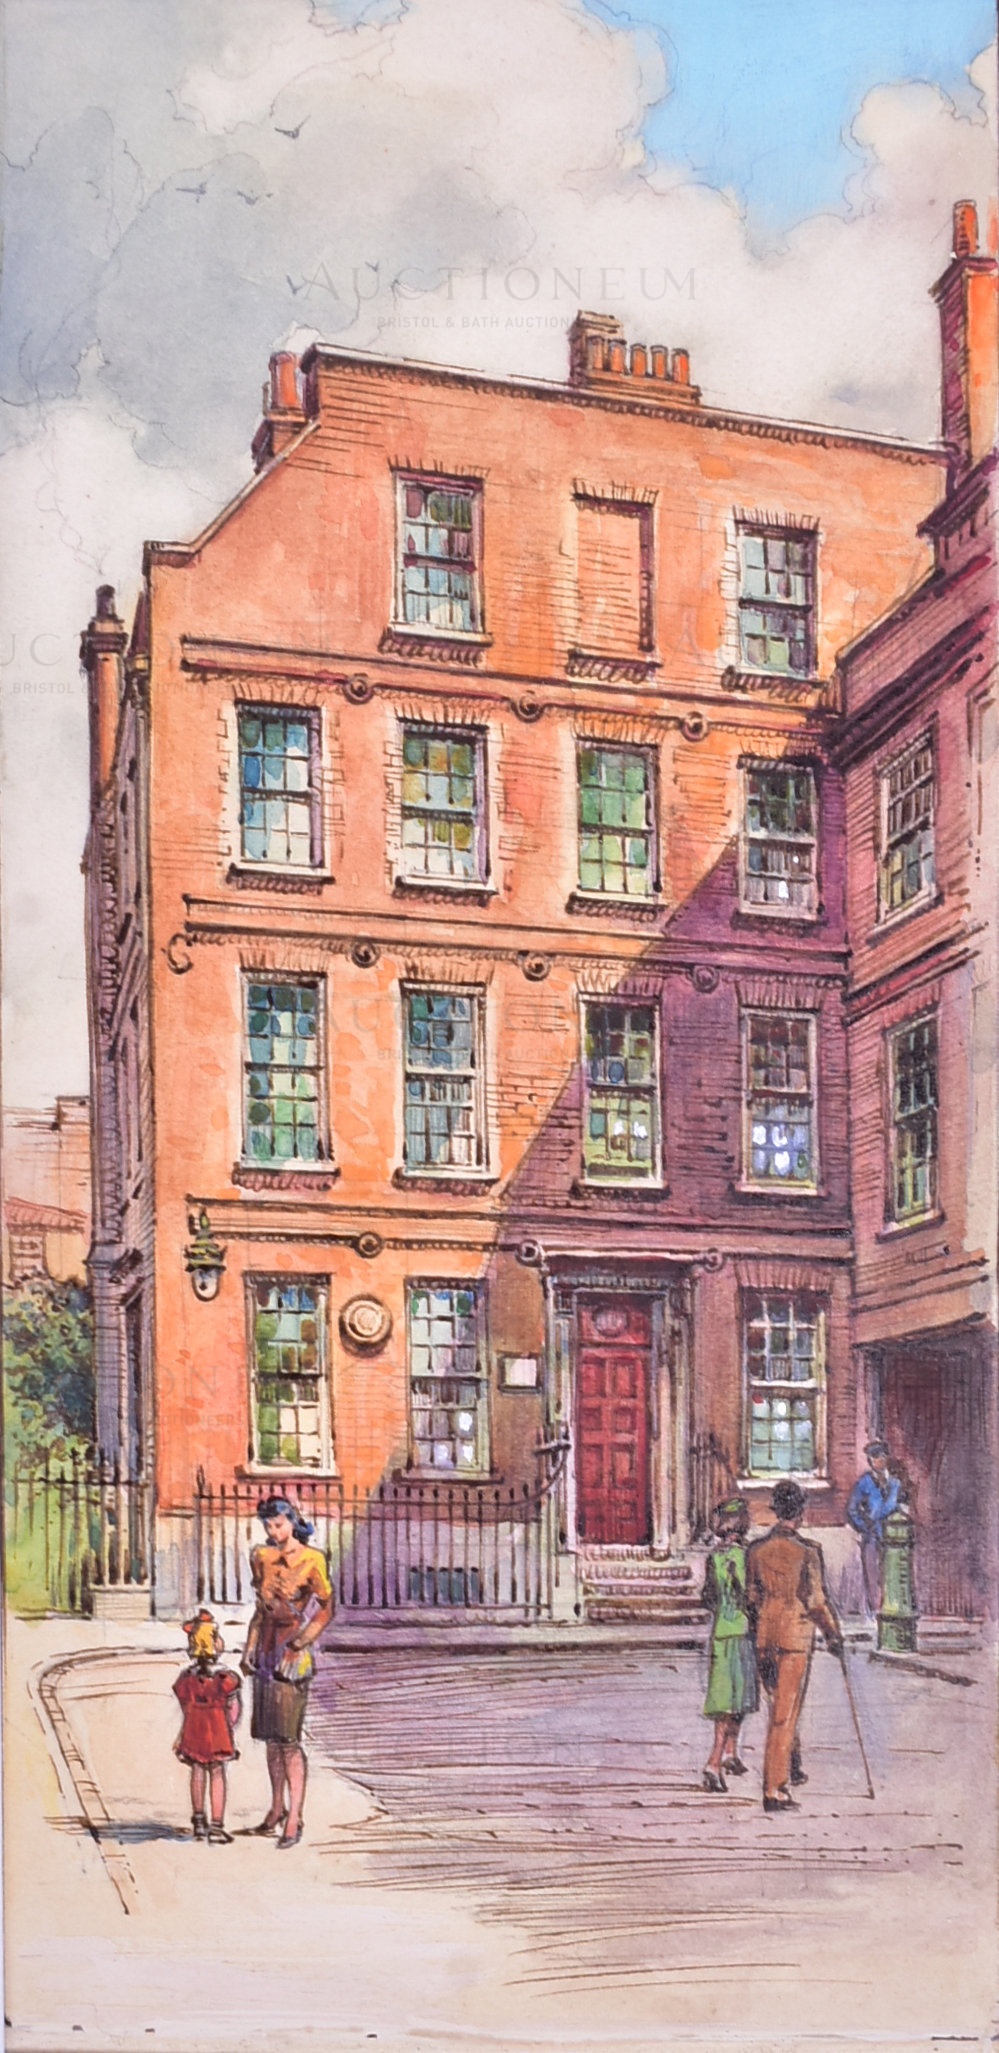 MARDON SON & HALL - LONDON - ORIGINAL CIGARETTE CARD ARTWORK - Image 3 of 5